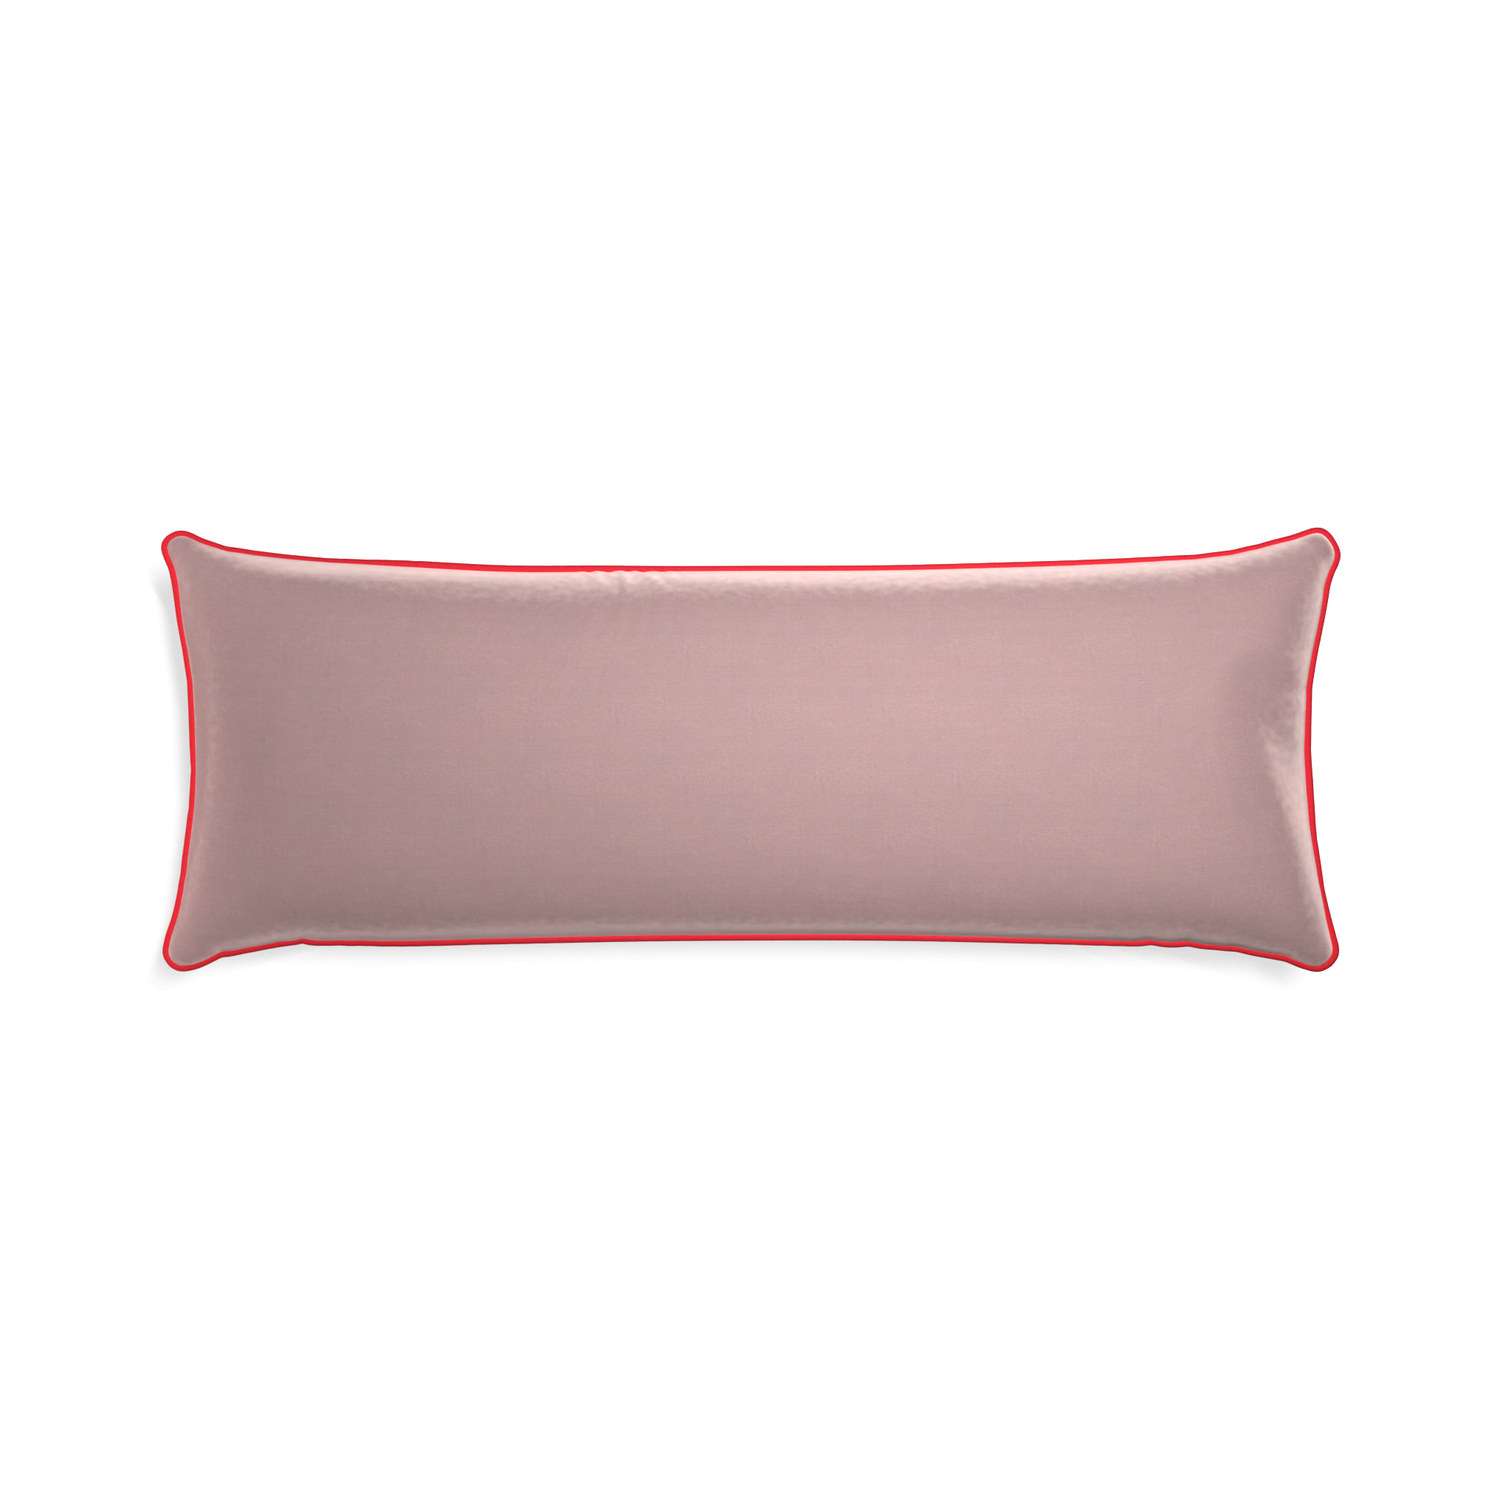 Xl-lumbar mauve velvet custom pillow with cherry piping on white background